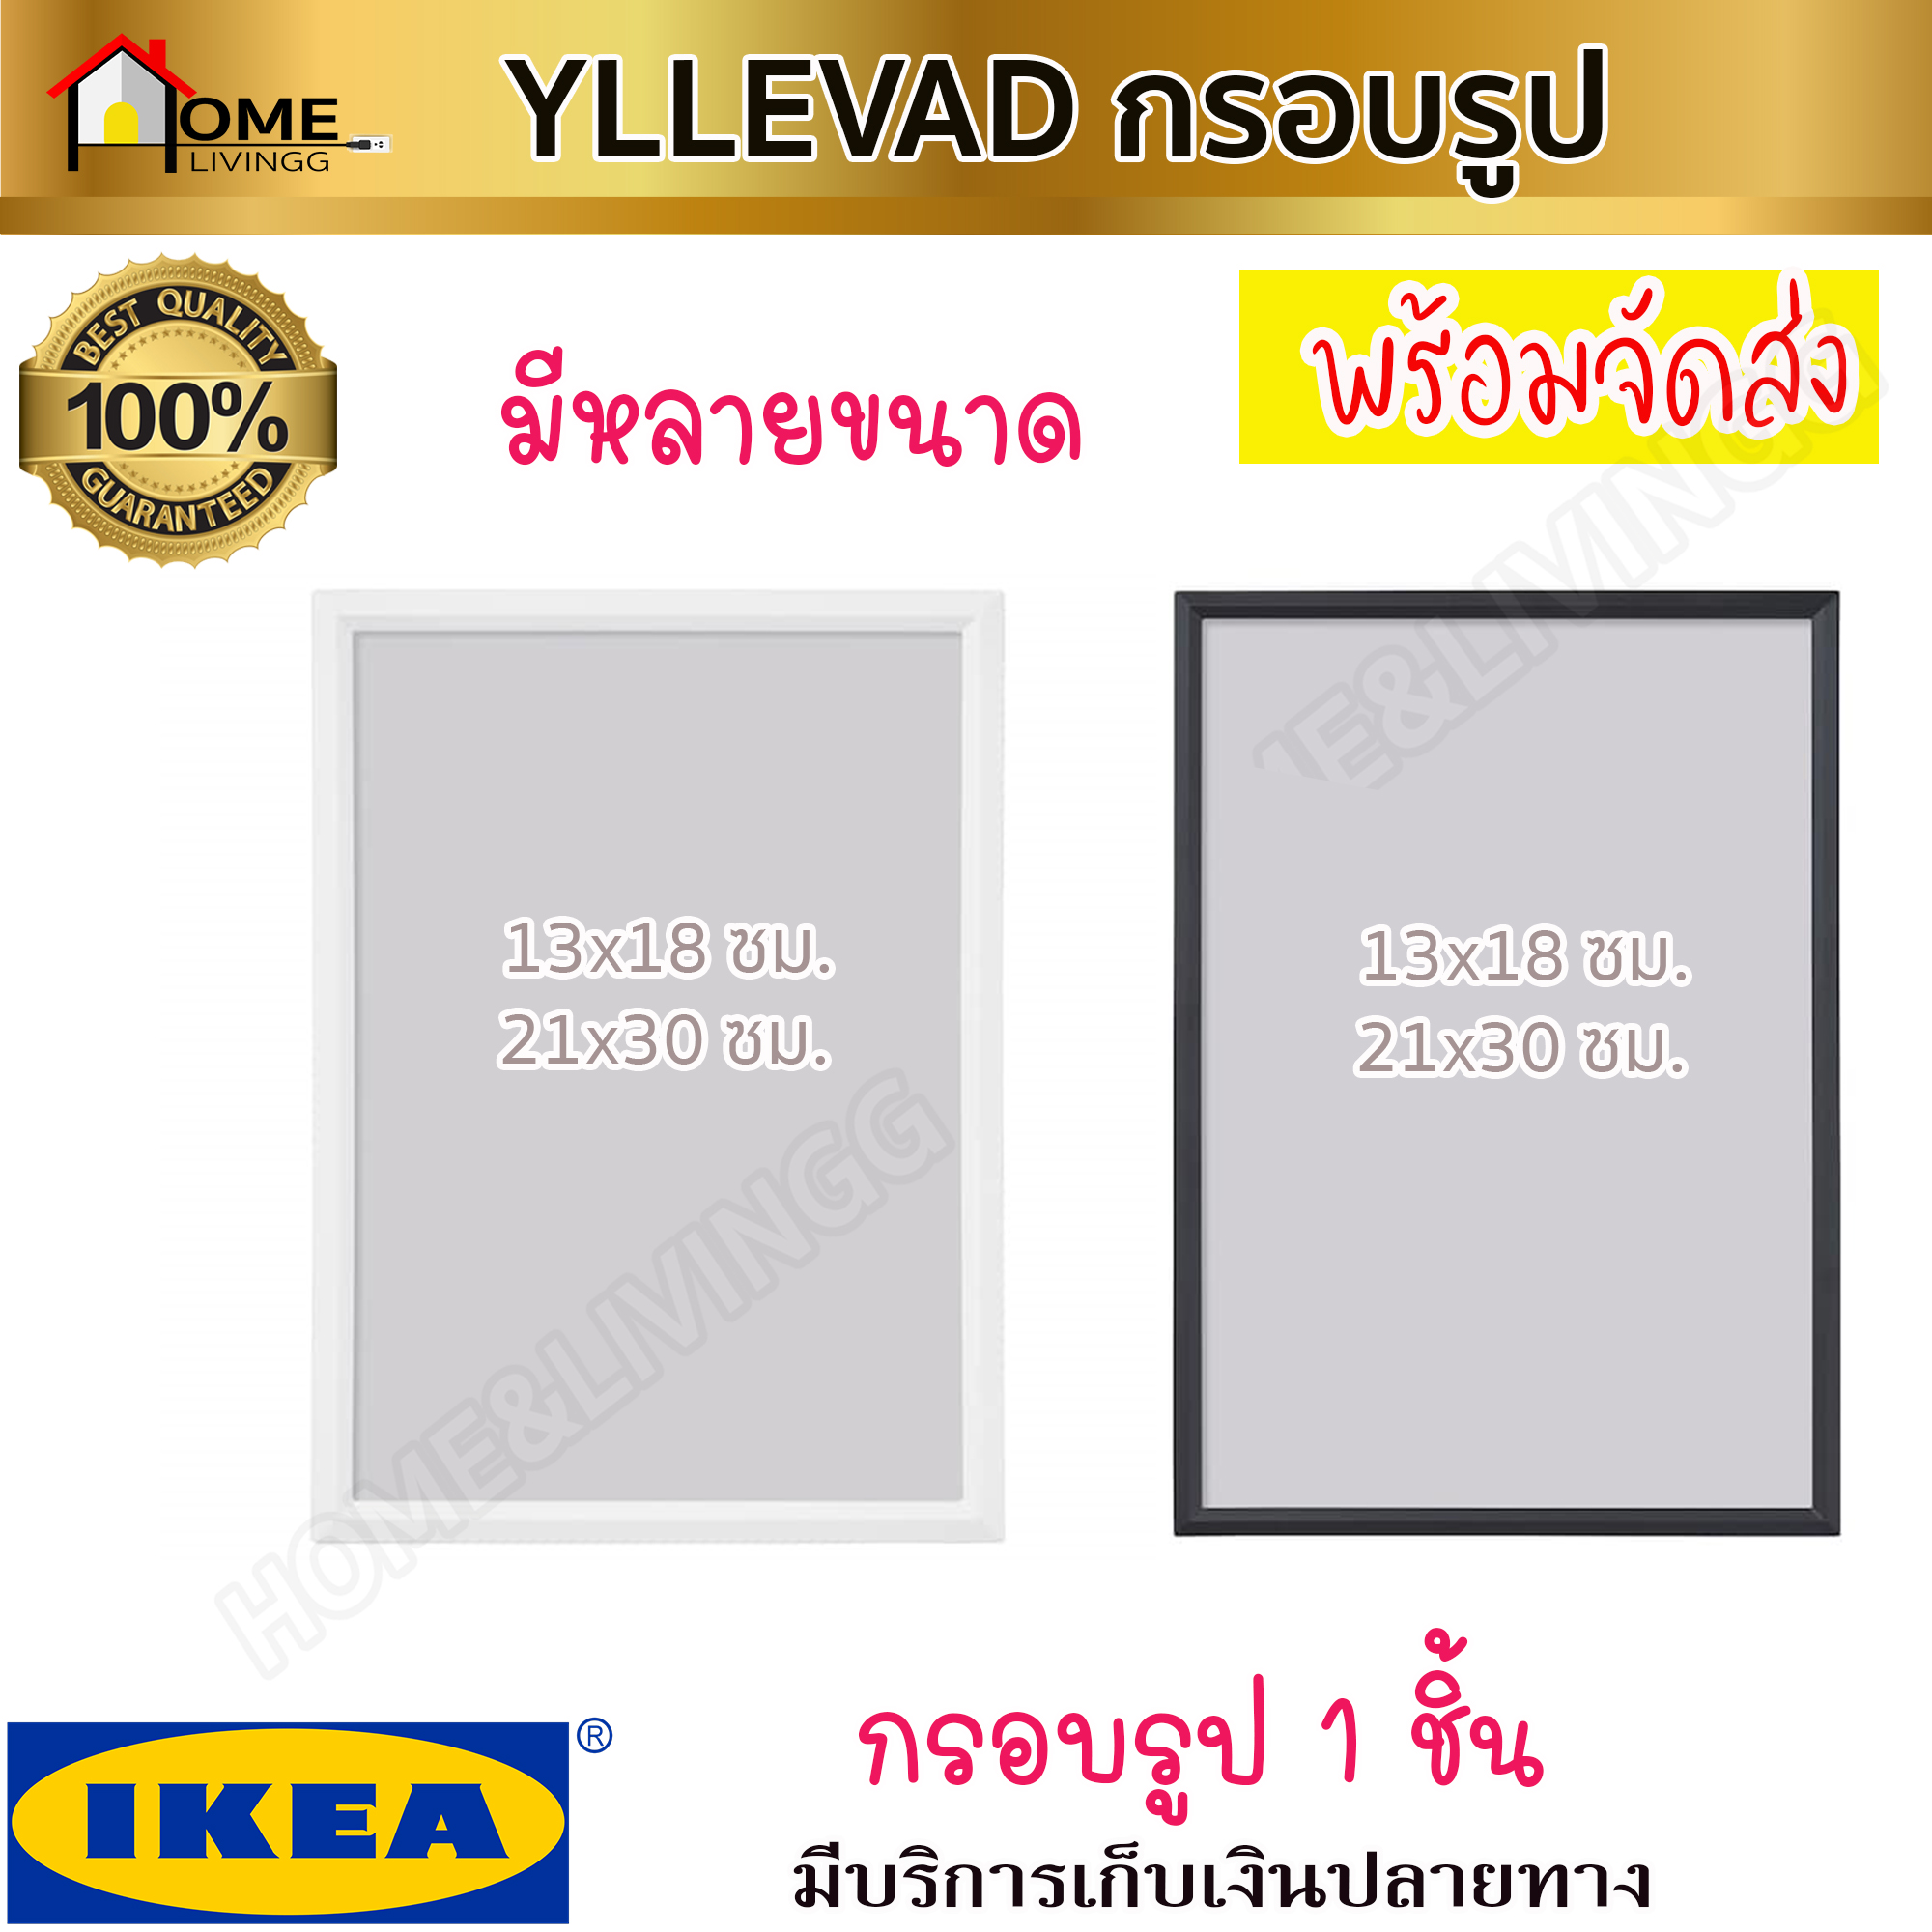 ?IKEA? ของแท้ YLLEVAD อิลเลวัด กรอบรูป, ดำ/ขาว, 13x18 ซม.และ 21x30 ซม.